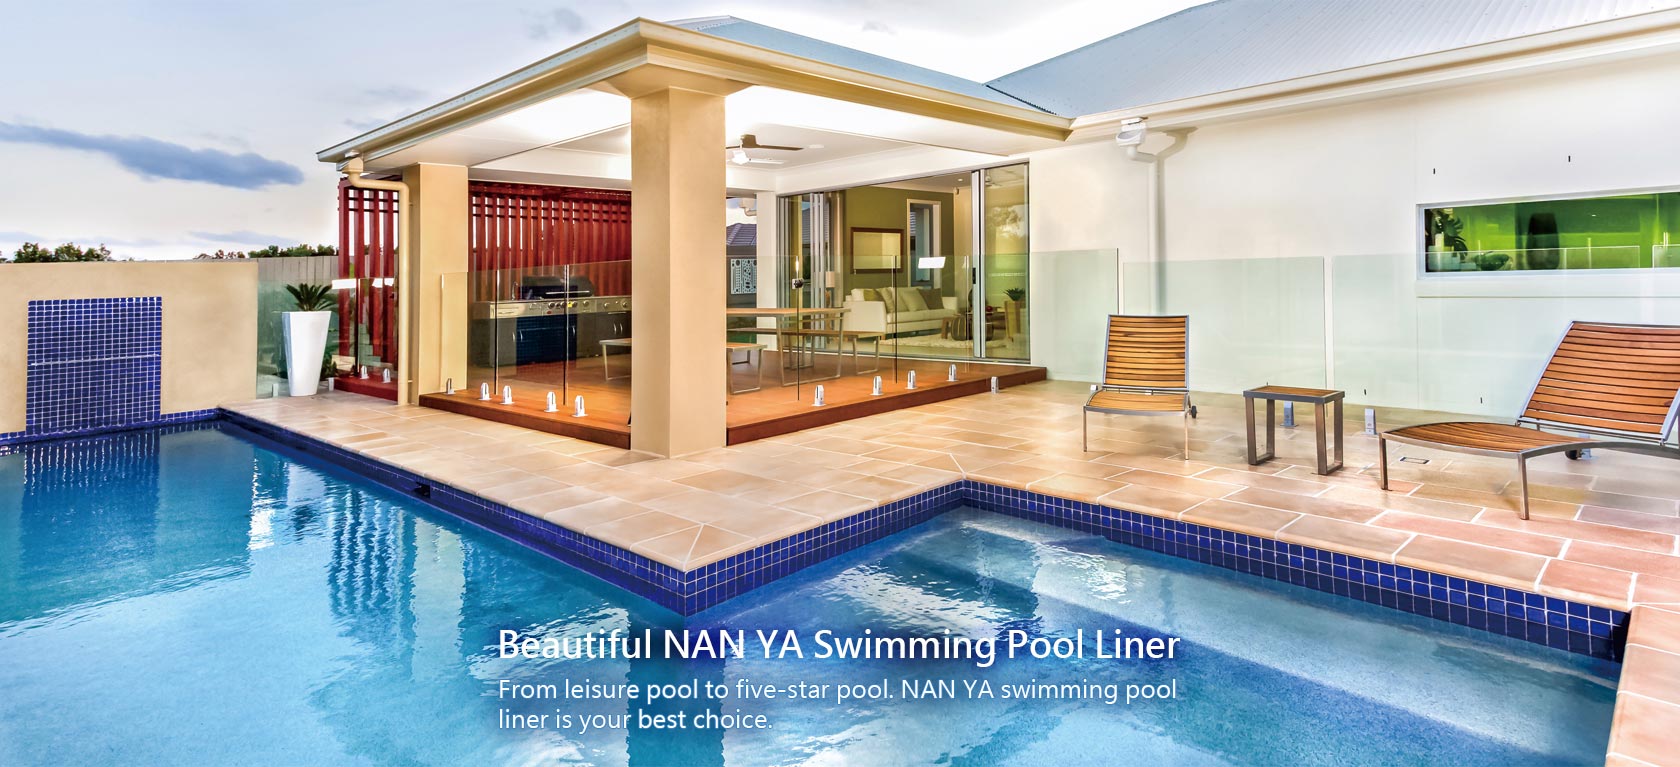 Beautiful NAN YA Swimming Pool Liner
